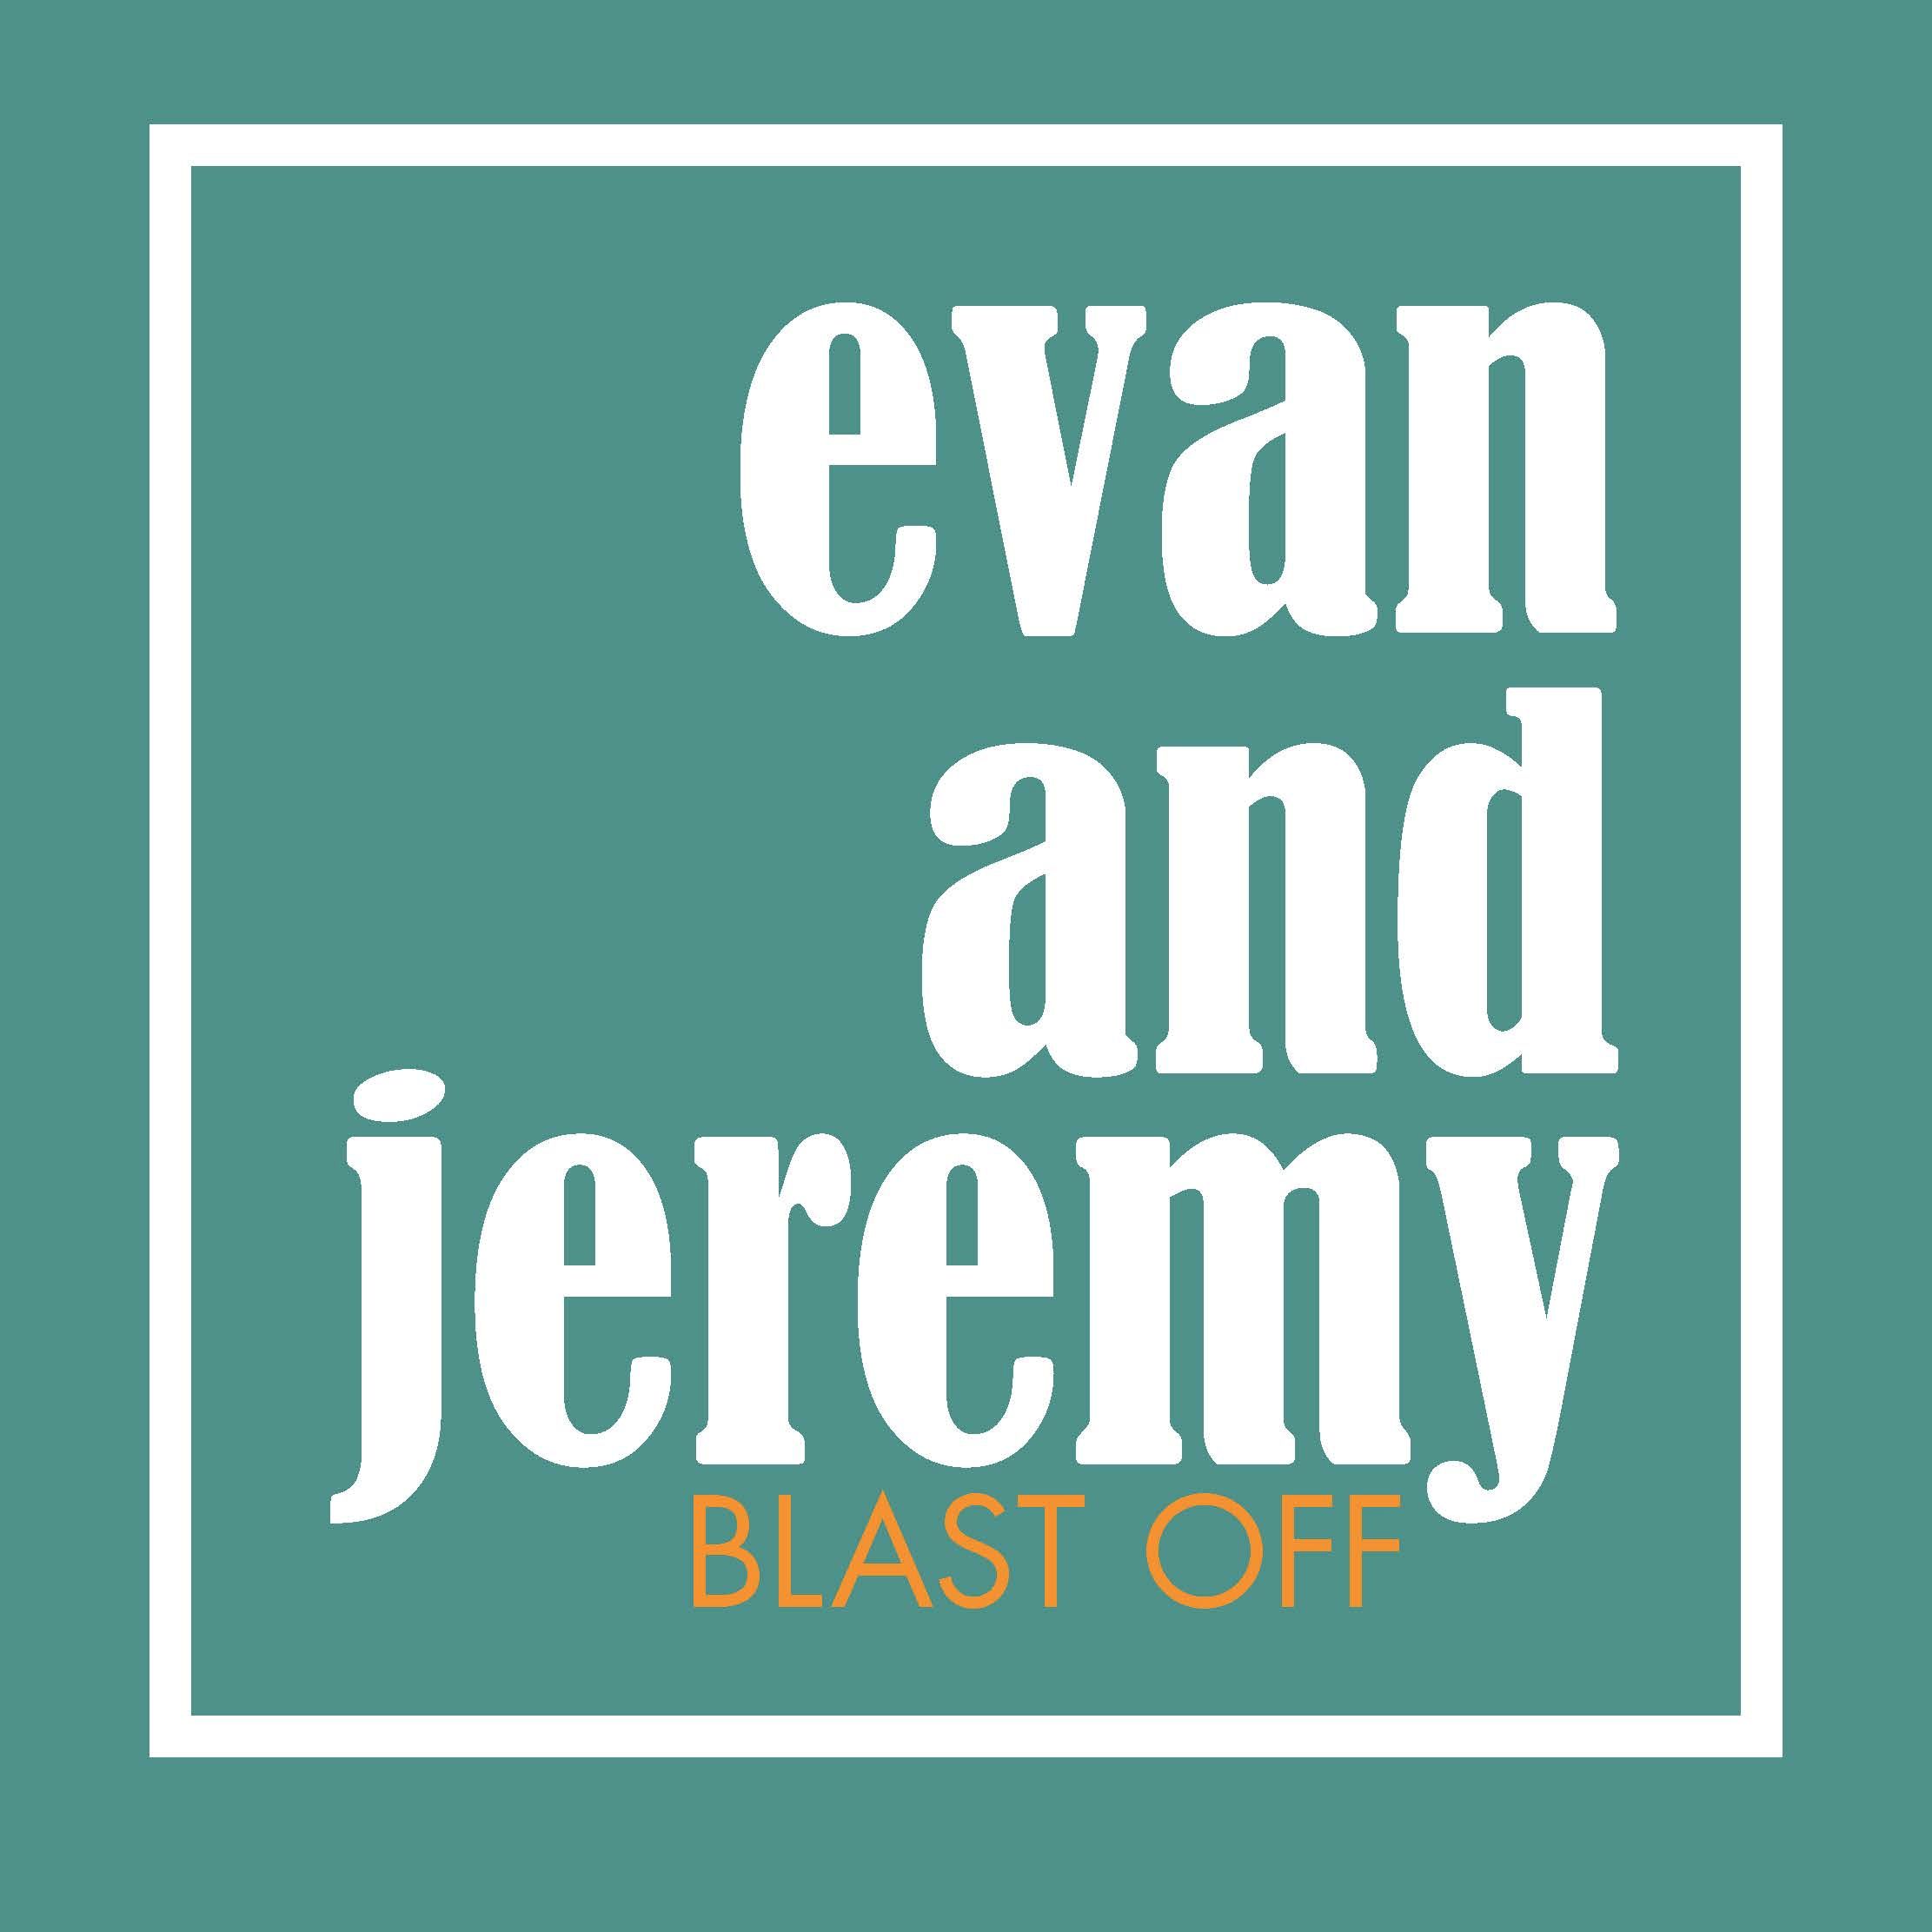 Evan & Jeremy Blast Off